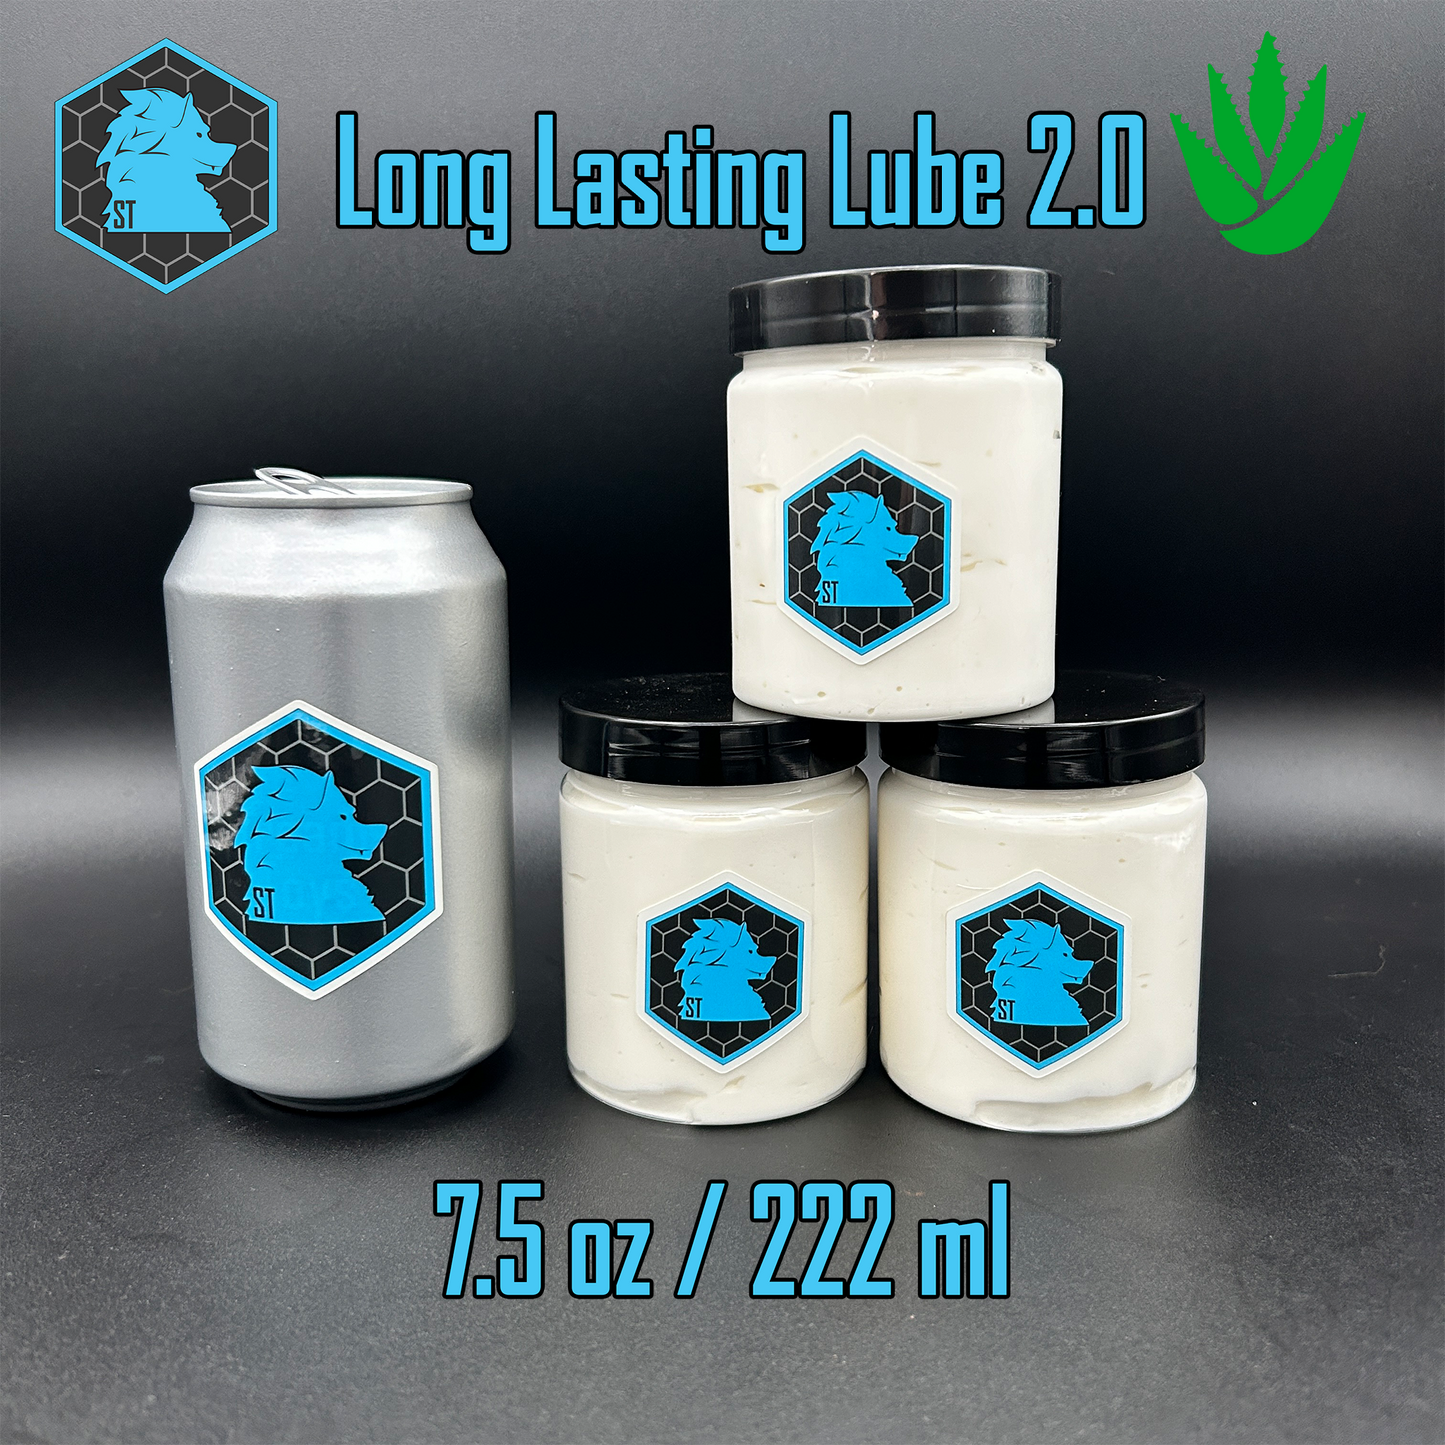 NEW! Long Lasting Lube 2.0 with Aloe Vera